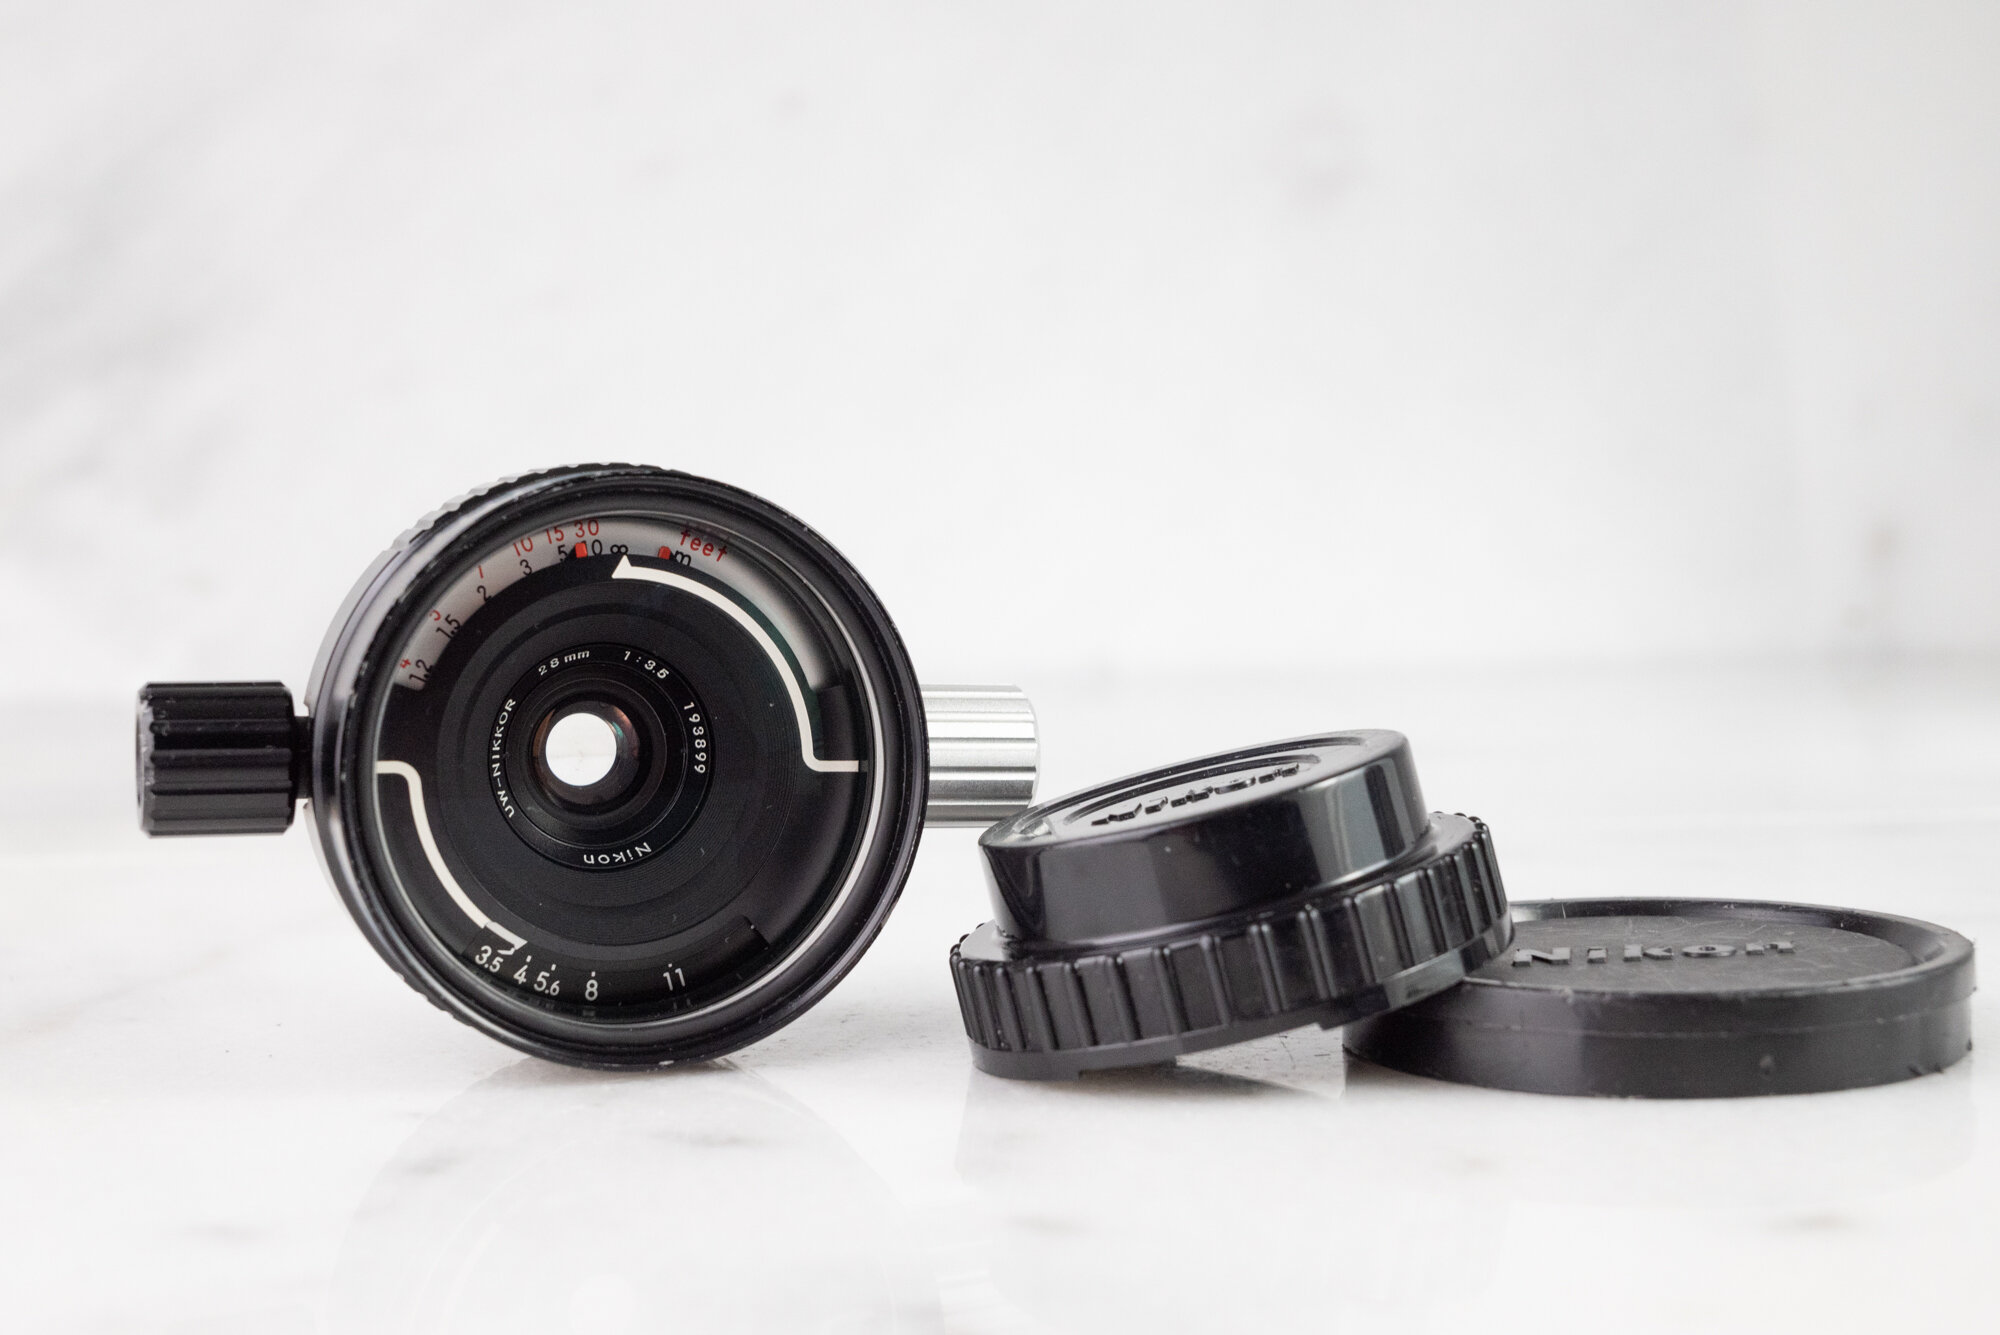 u.w-nikkor NIKONOS 28mm f3.5(富士fxマウント改造) - カメラ